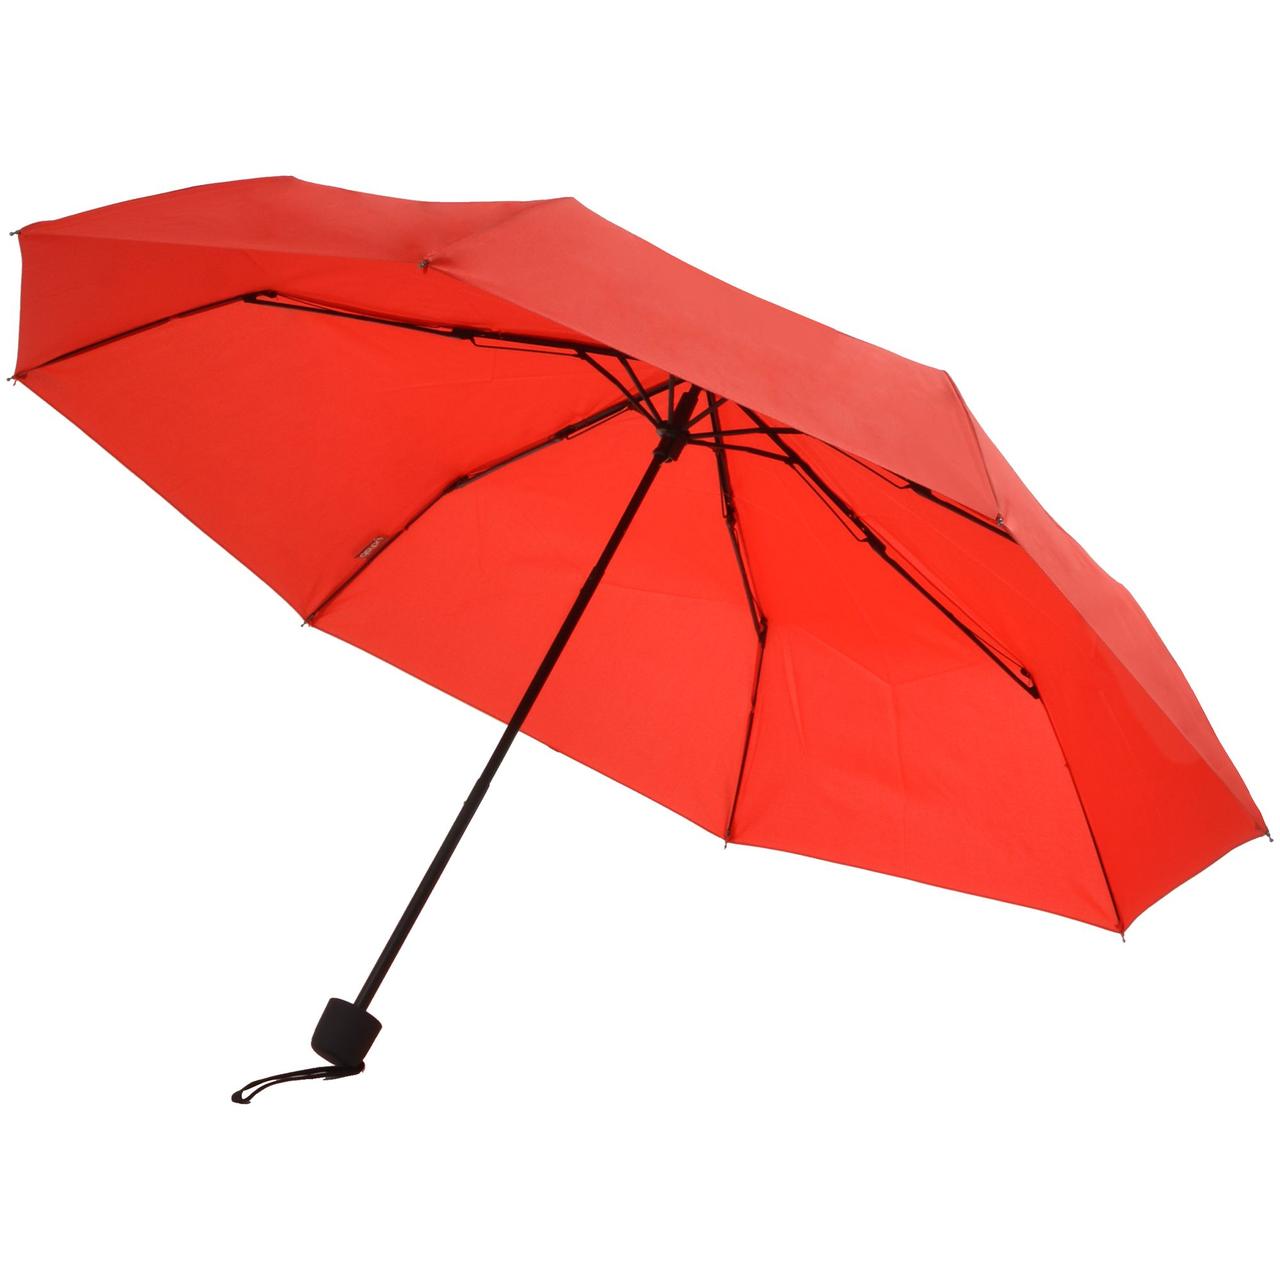 Зонт складной Hit Mini, красный (артикул 11839.50), фото 1